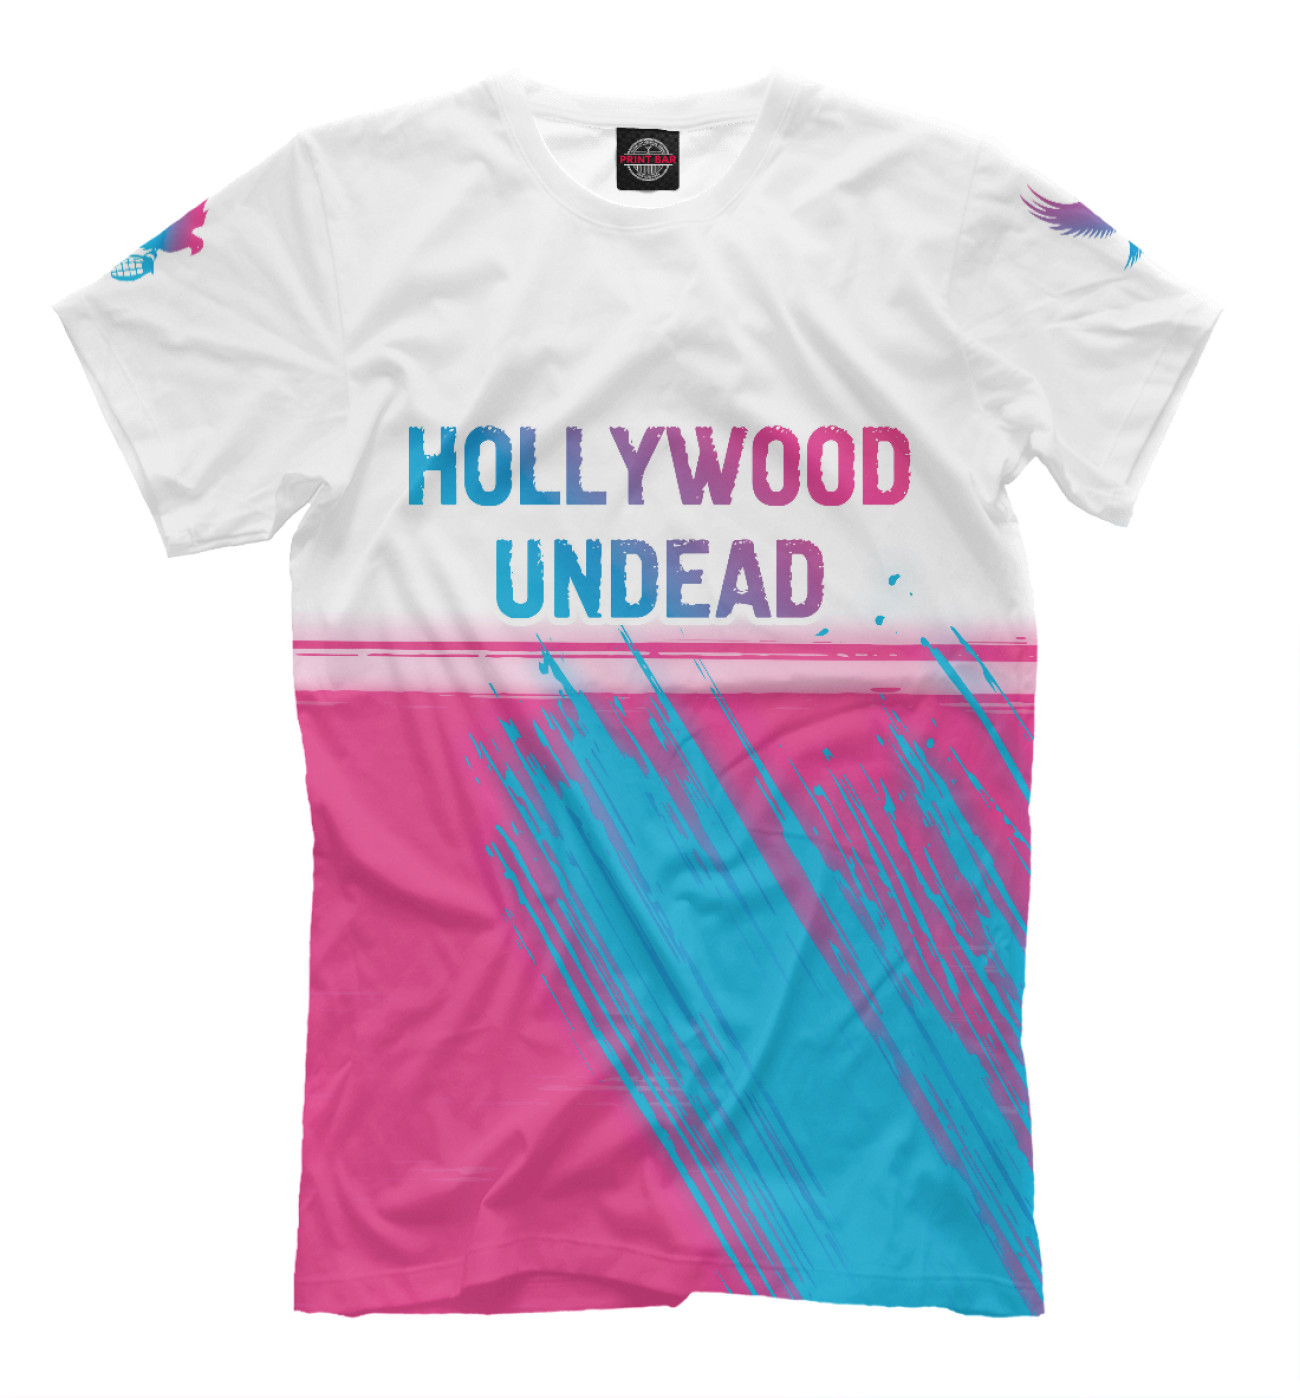 Мужская Футболка Hollywood Undead Neon Gradient, артикул: HLW-920025-fut-2